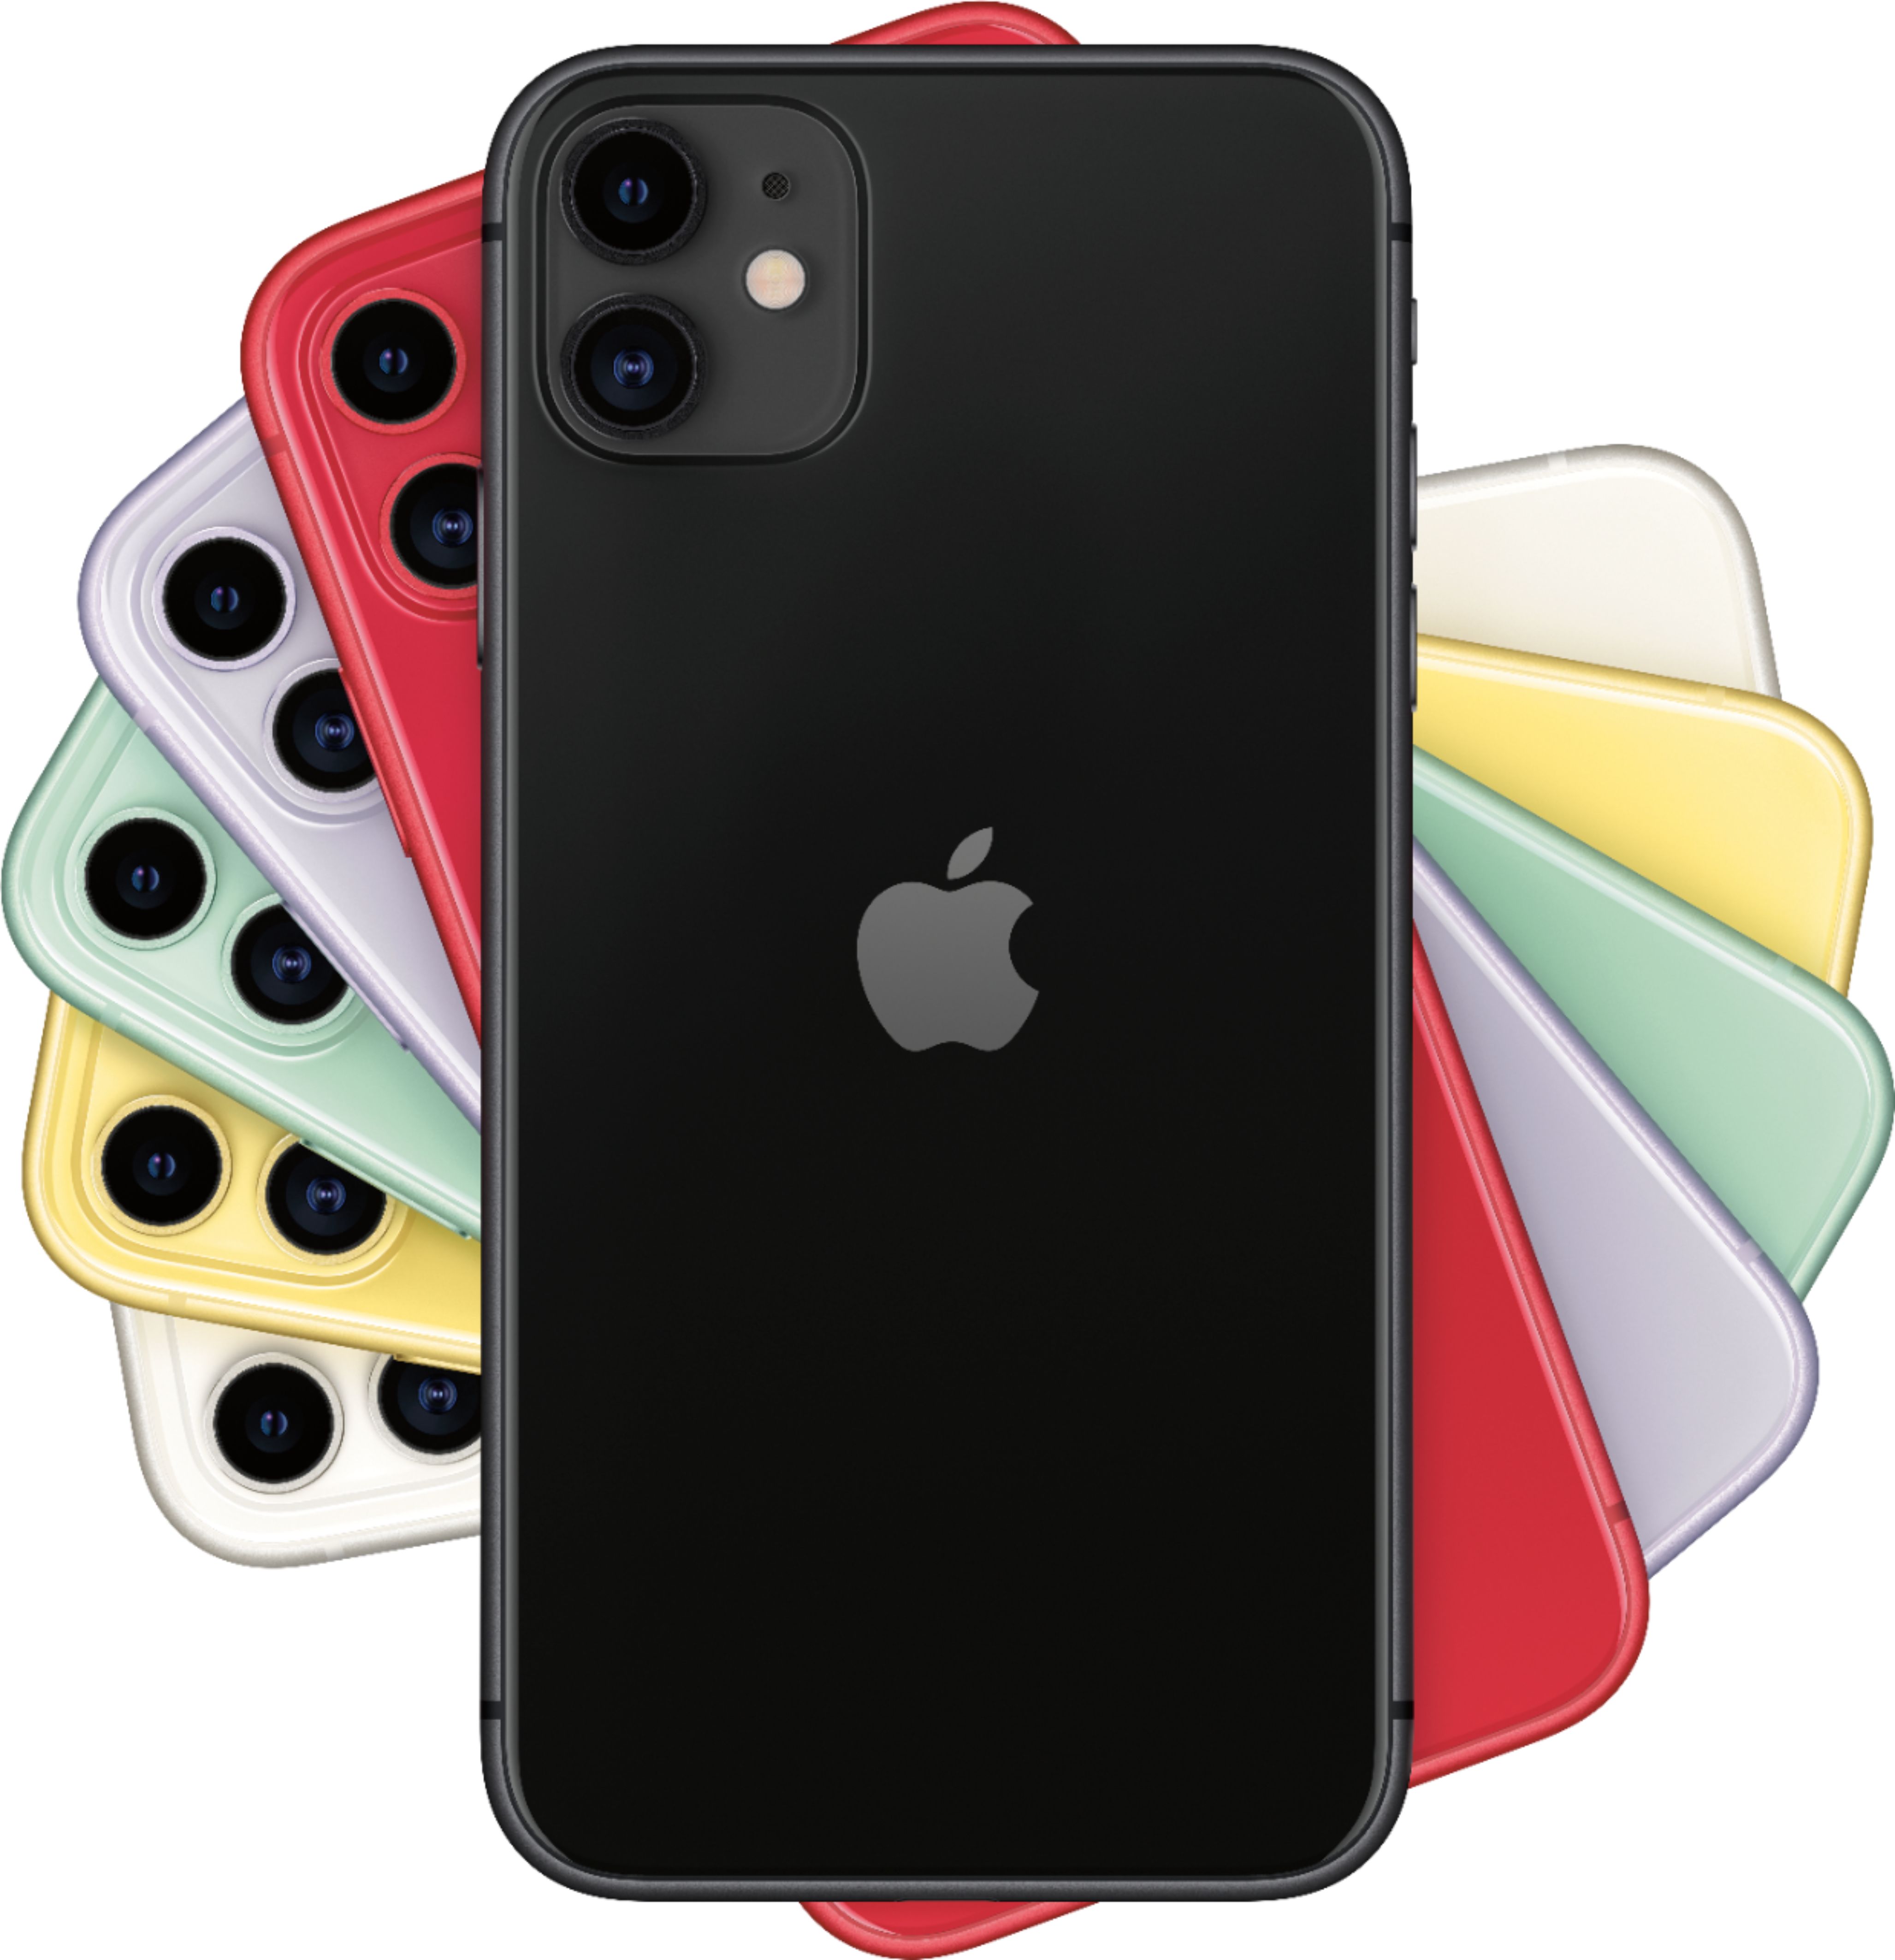 Apple Iphone 11 64gb Black Atandt Mwl72lla Best Buy